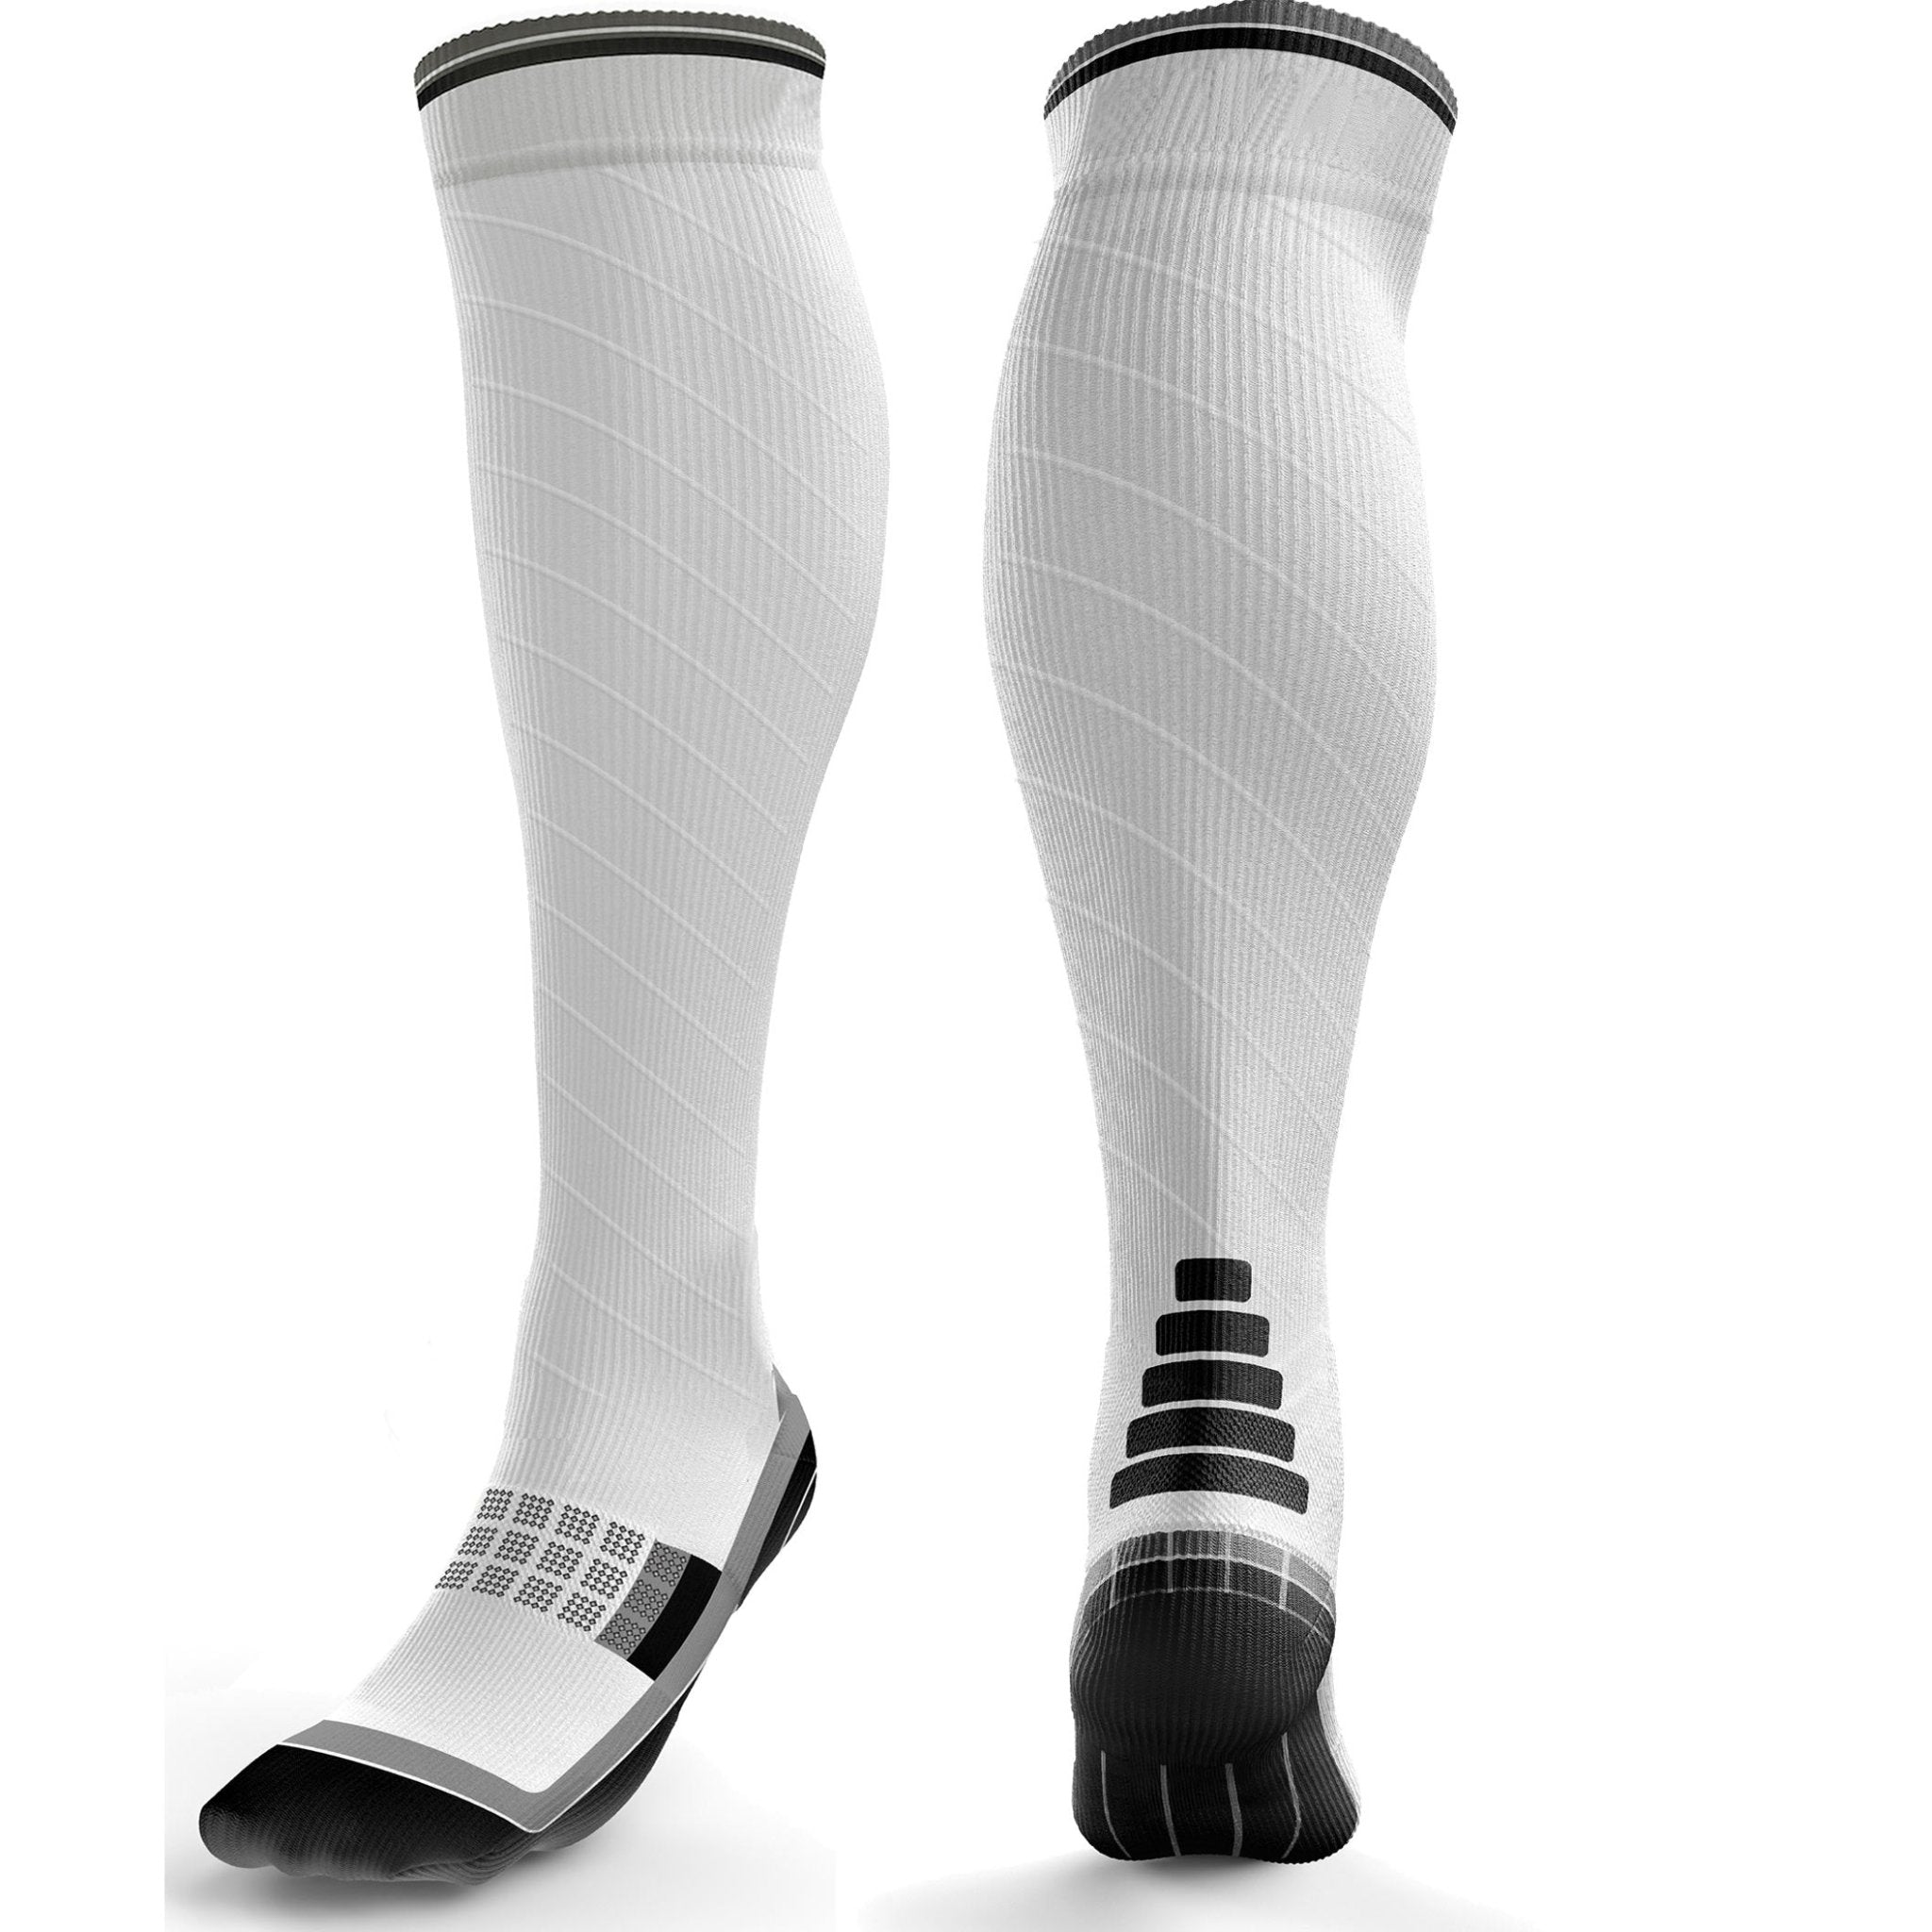 aZengear Graduated Compression Socks for Men and Women (20-30 mmHg)